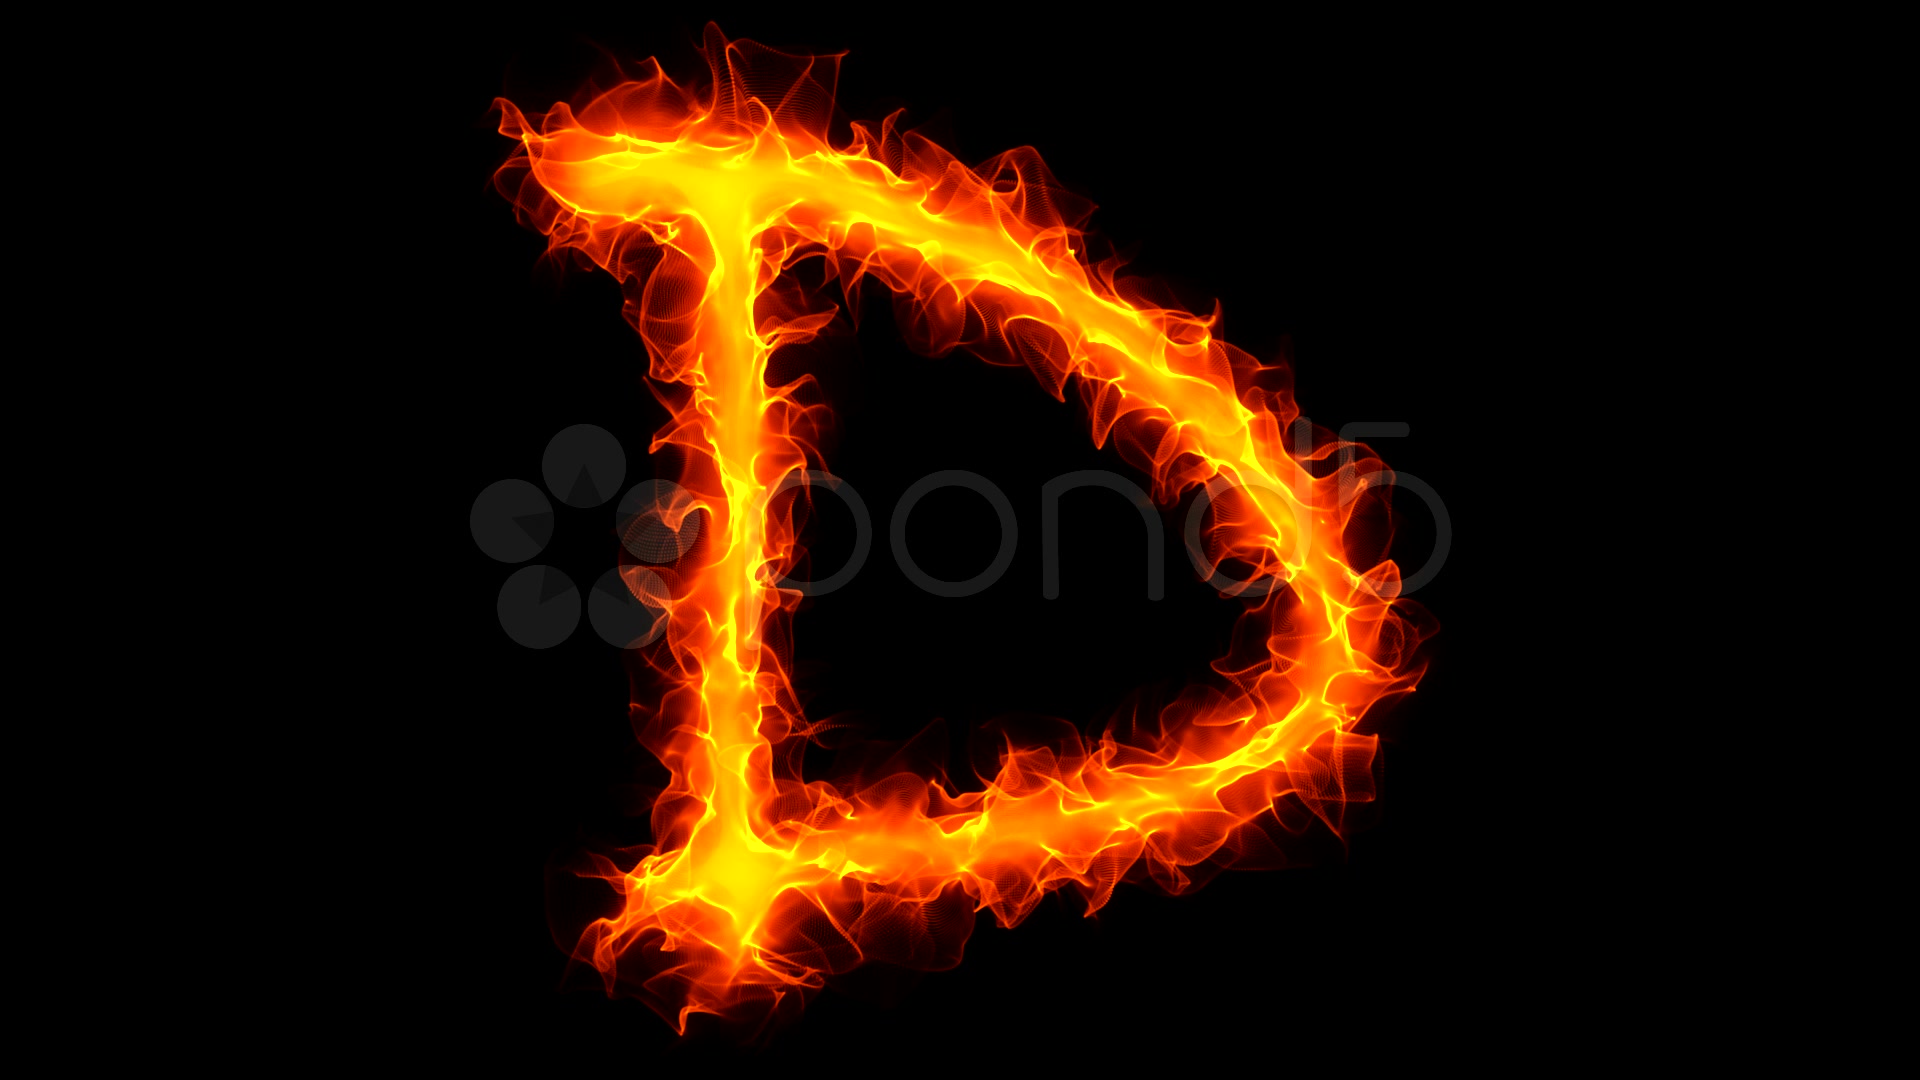 Fire letter D graffiti ~ Video Clip #950957 | Pond5